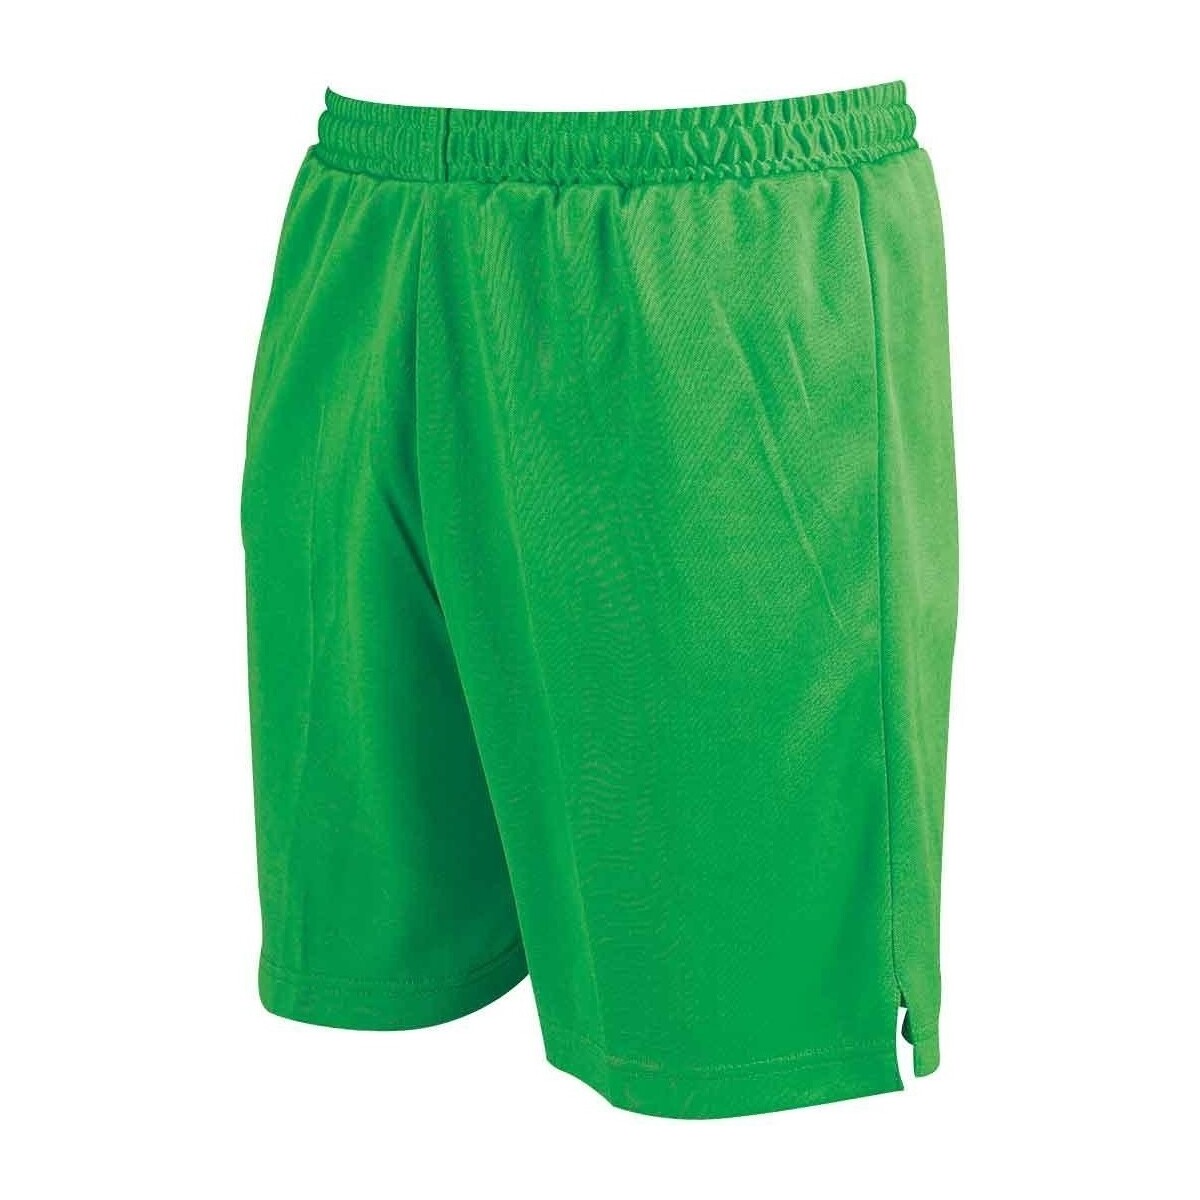 textil Shorts / Bermudas Precision Attack Verde